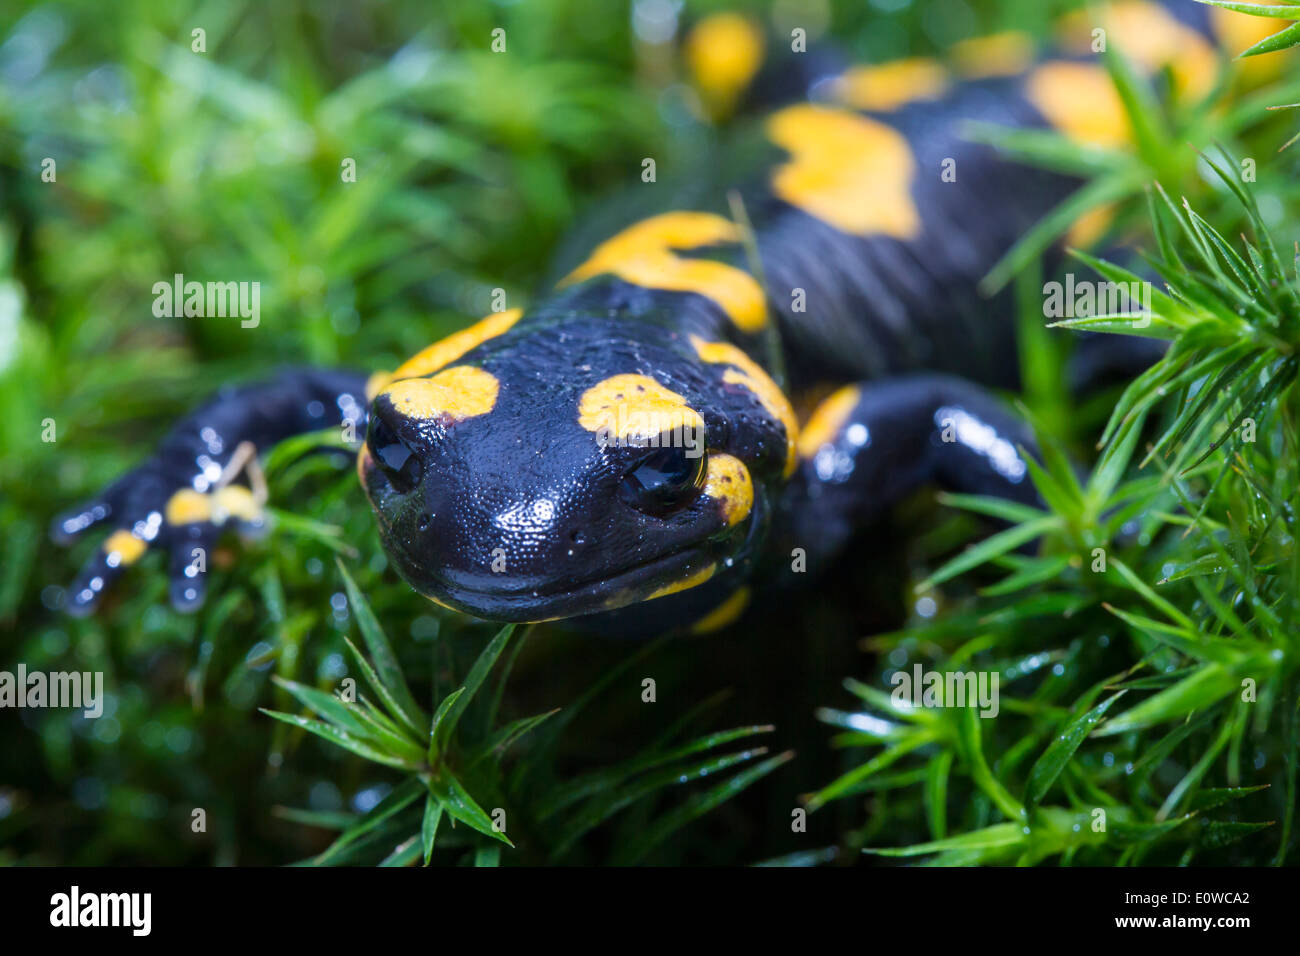 Fire Salamander (Salamandra salamandra) in moss. Germany Stock Photo